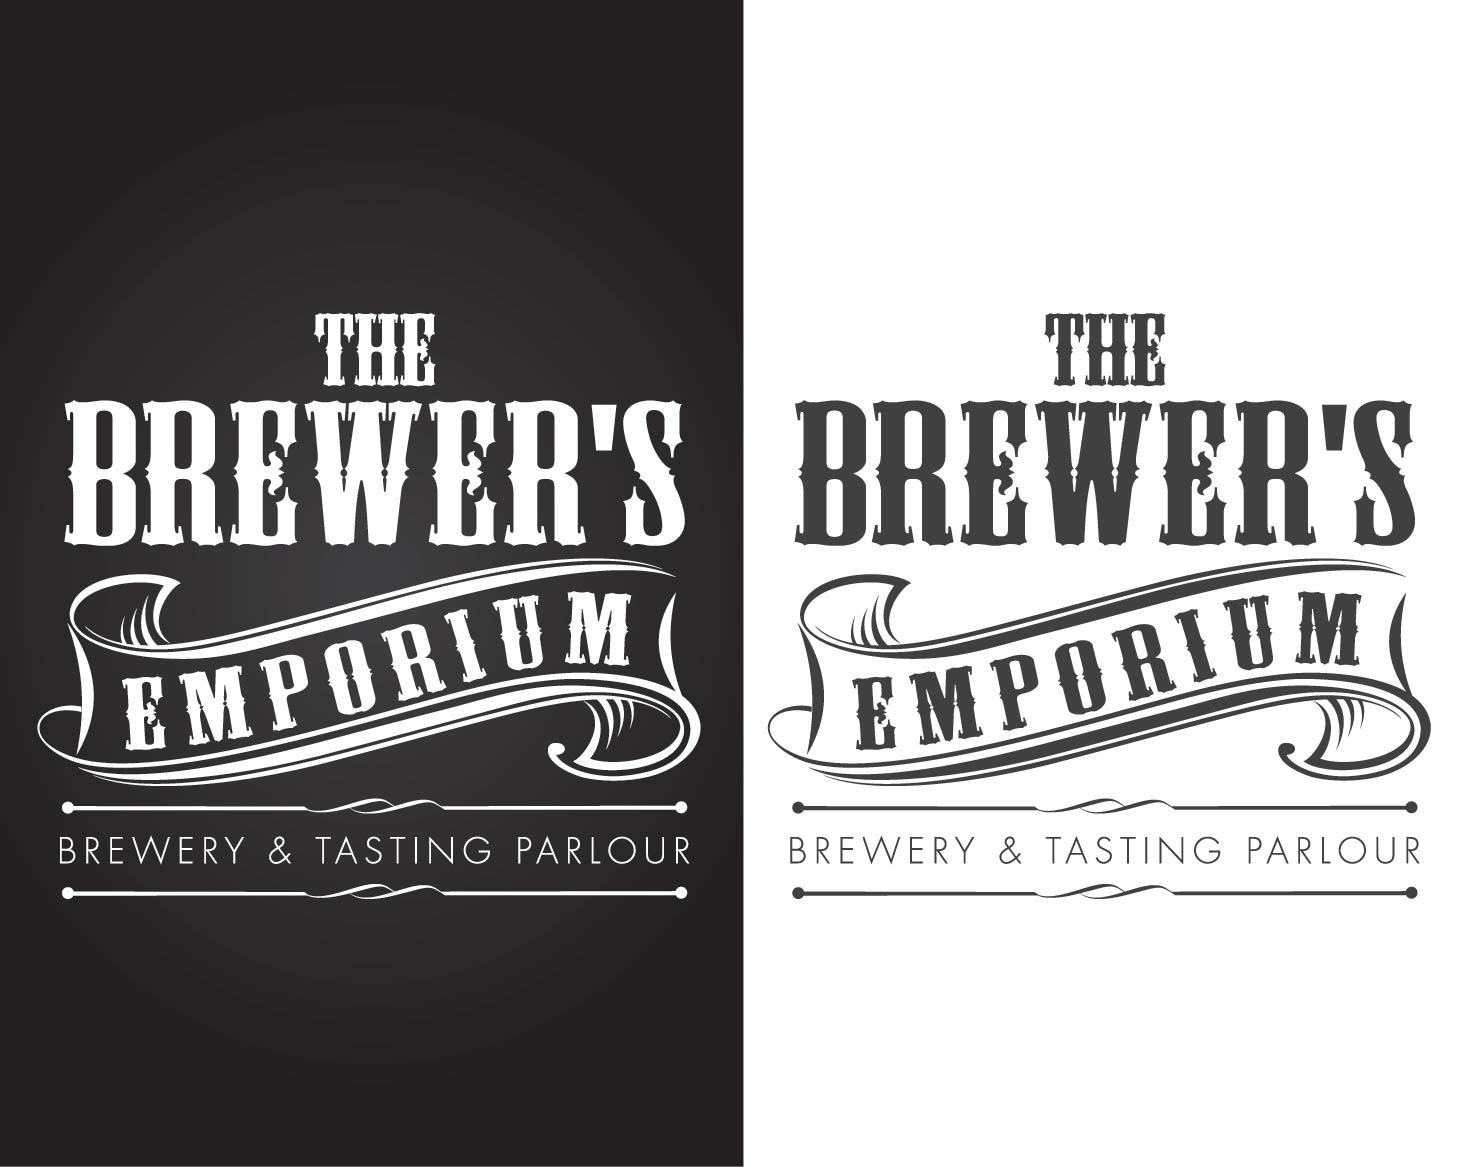 Logo Design entry 1047413 submitted by bocaj.ecyoj to the Logo Design for The Brewer's Emporium run by BrewersEmporium